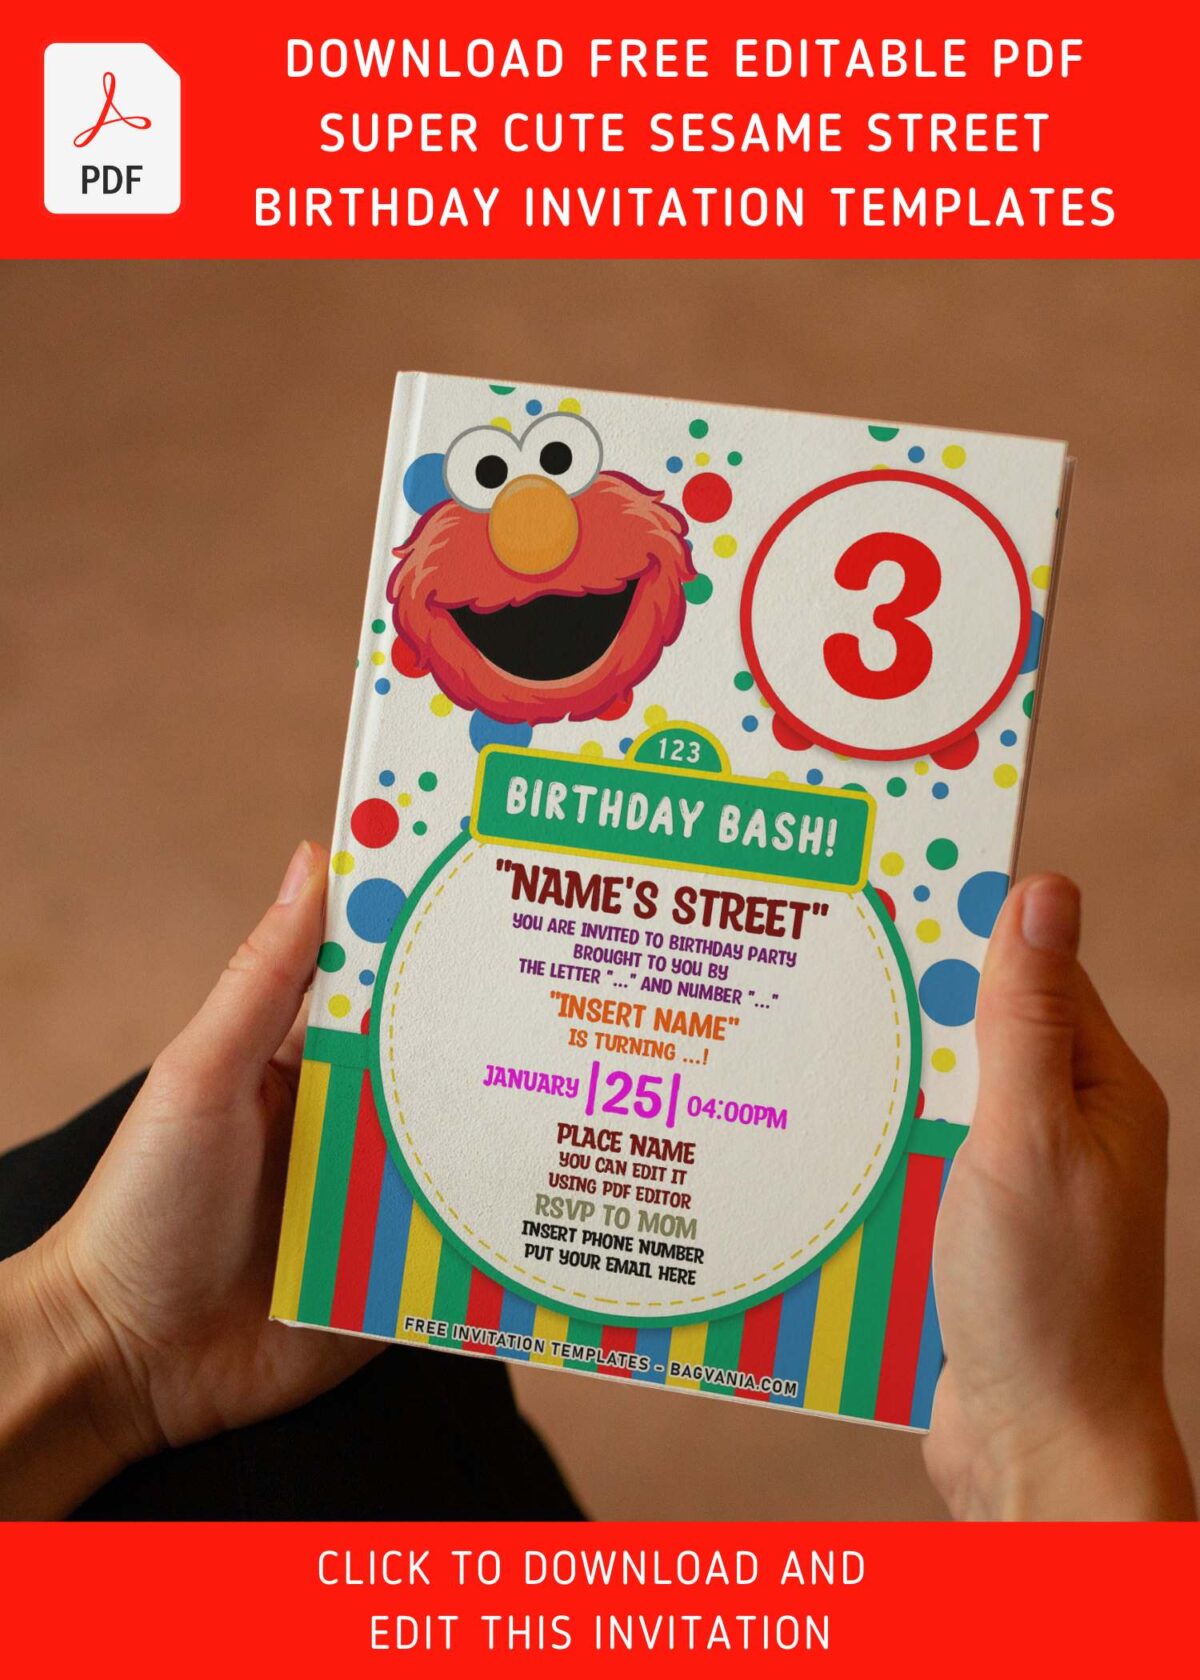 (Free Editable PDF) Super Cute Sesame Street Birthday Invitation Templates with editable text